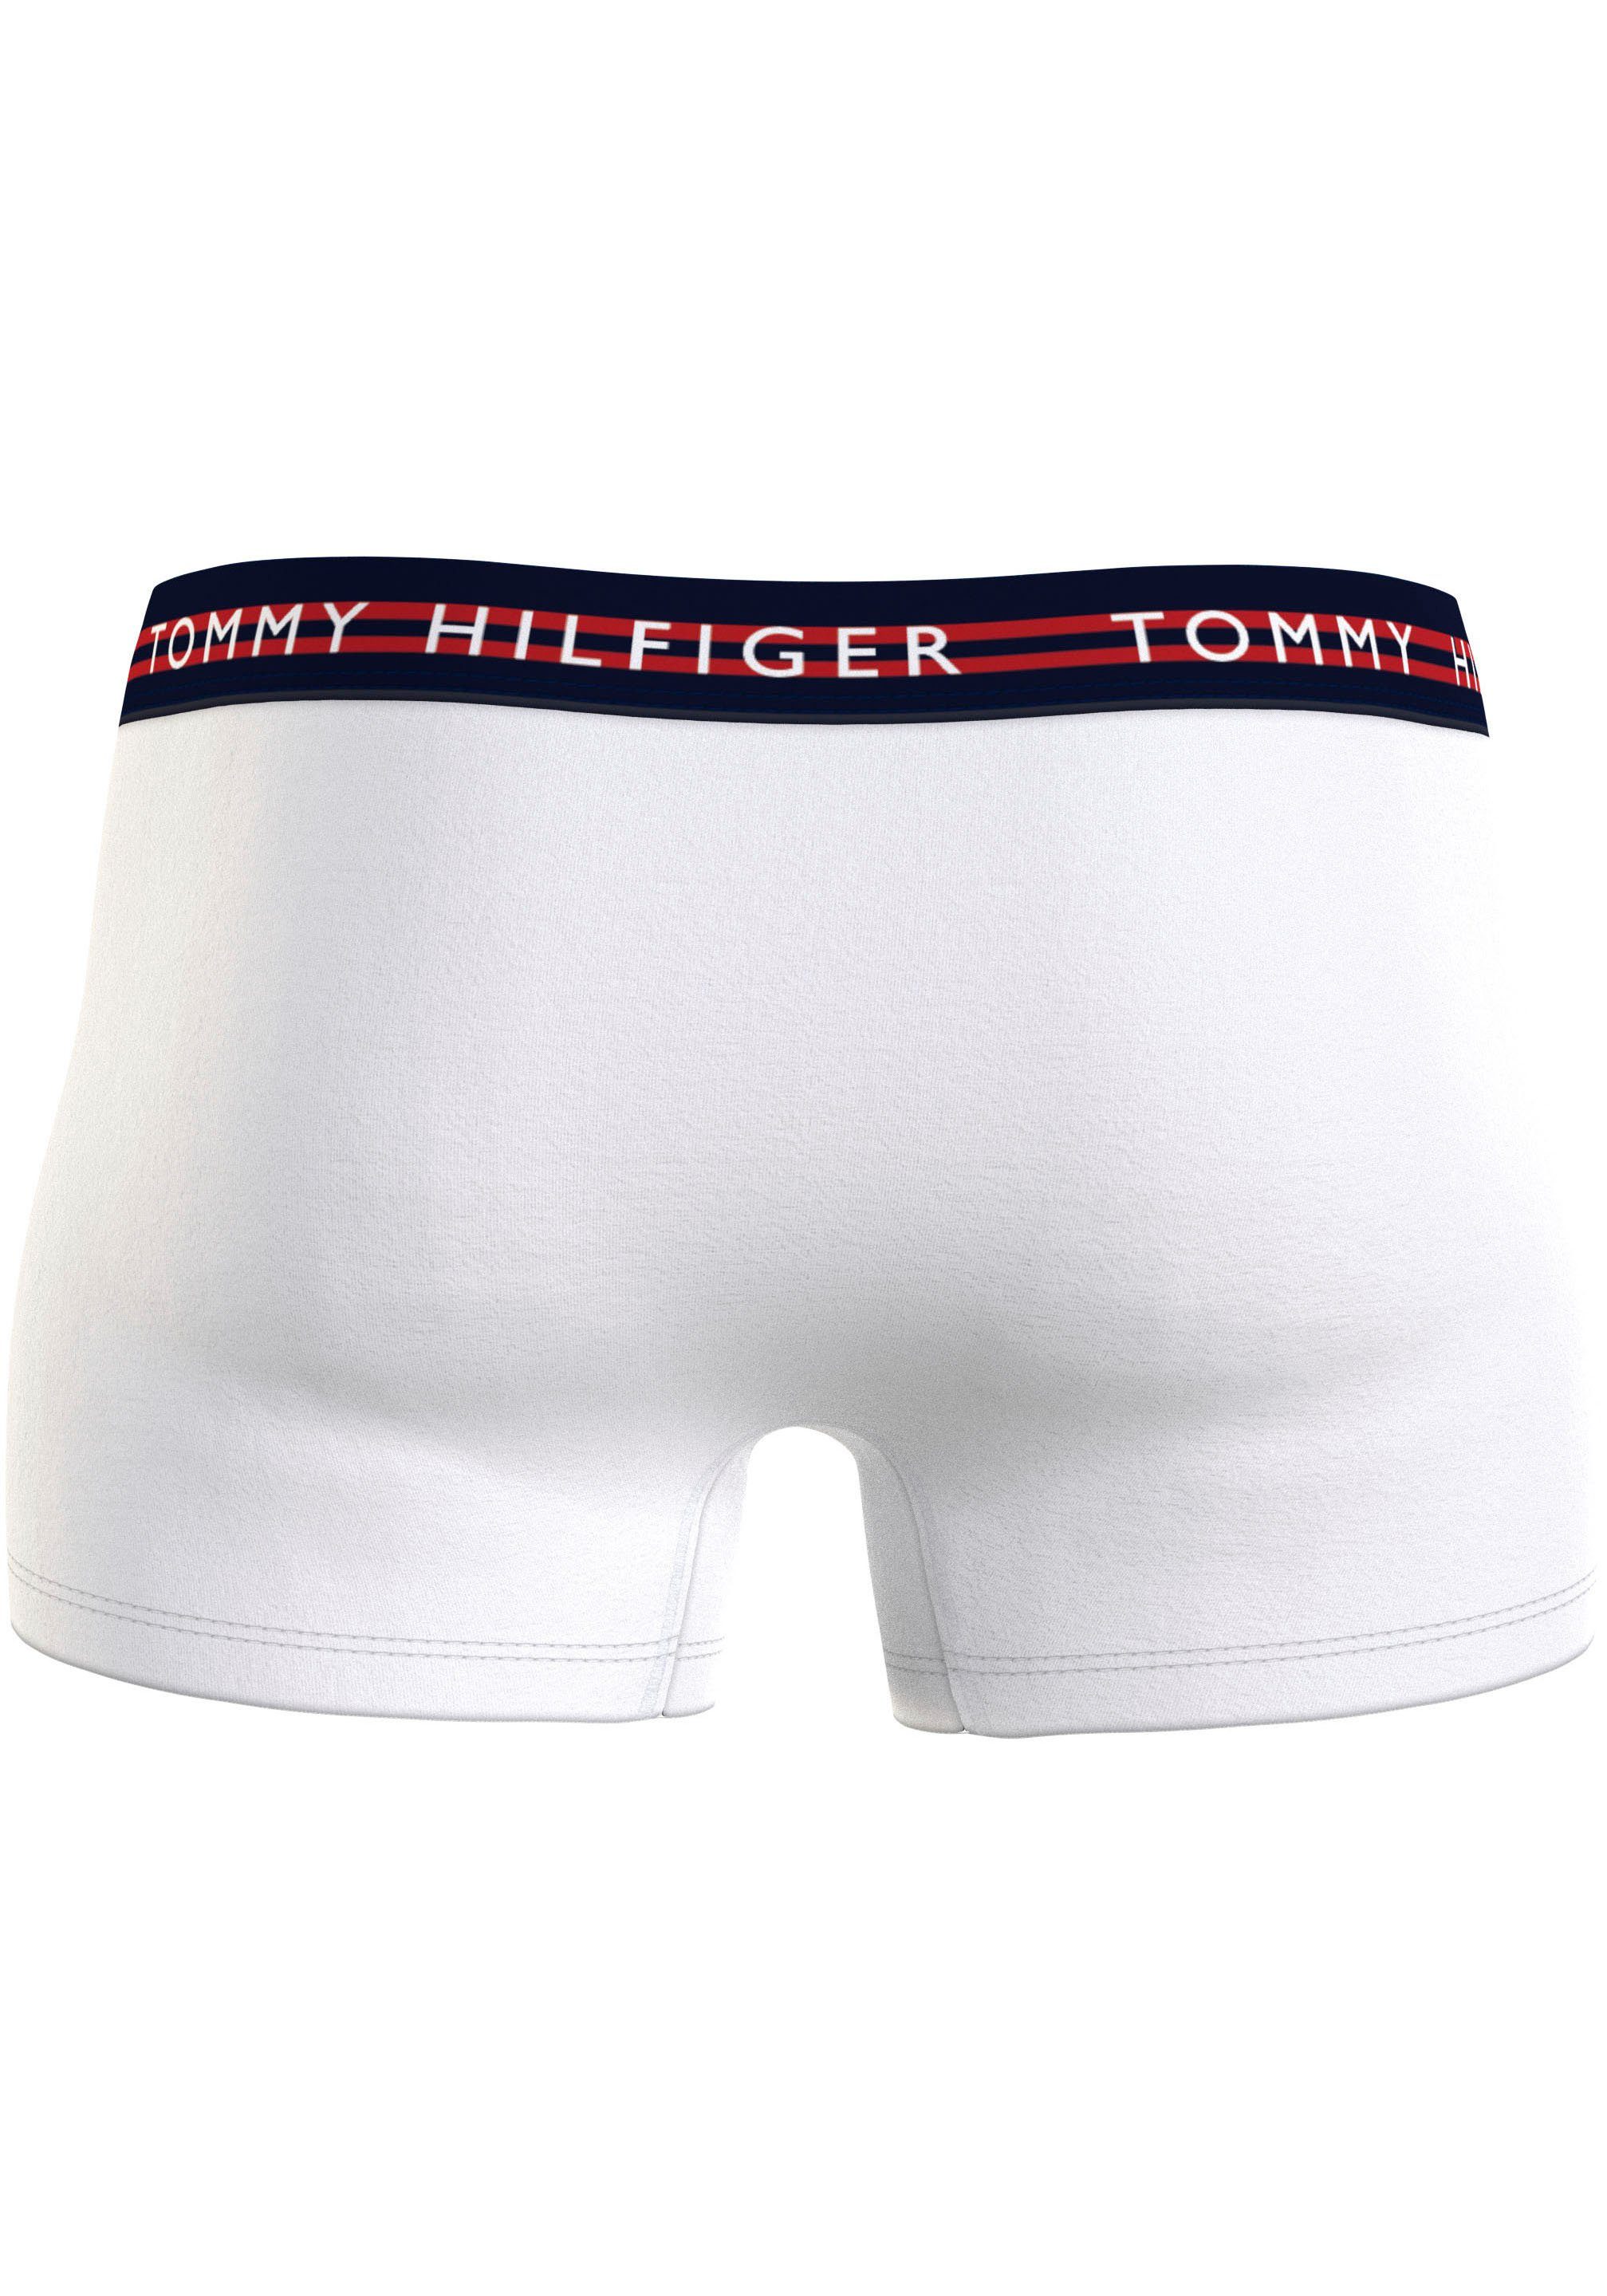 Tommy Hilfiger am BODY DIFF Boxershorts 3er-Pack) + Underwear sky Logo (Packung, 3P WB TRUNK mit COLOR Taillenbund red/white/desert